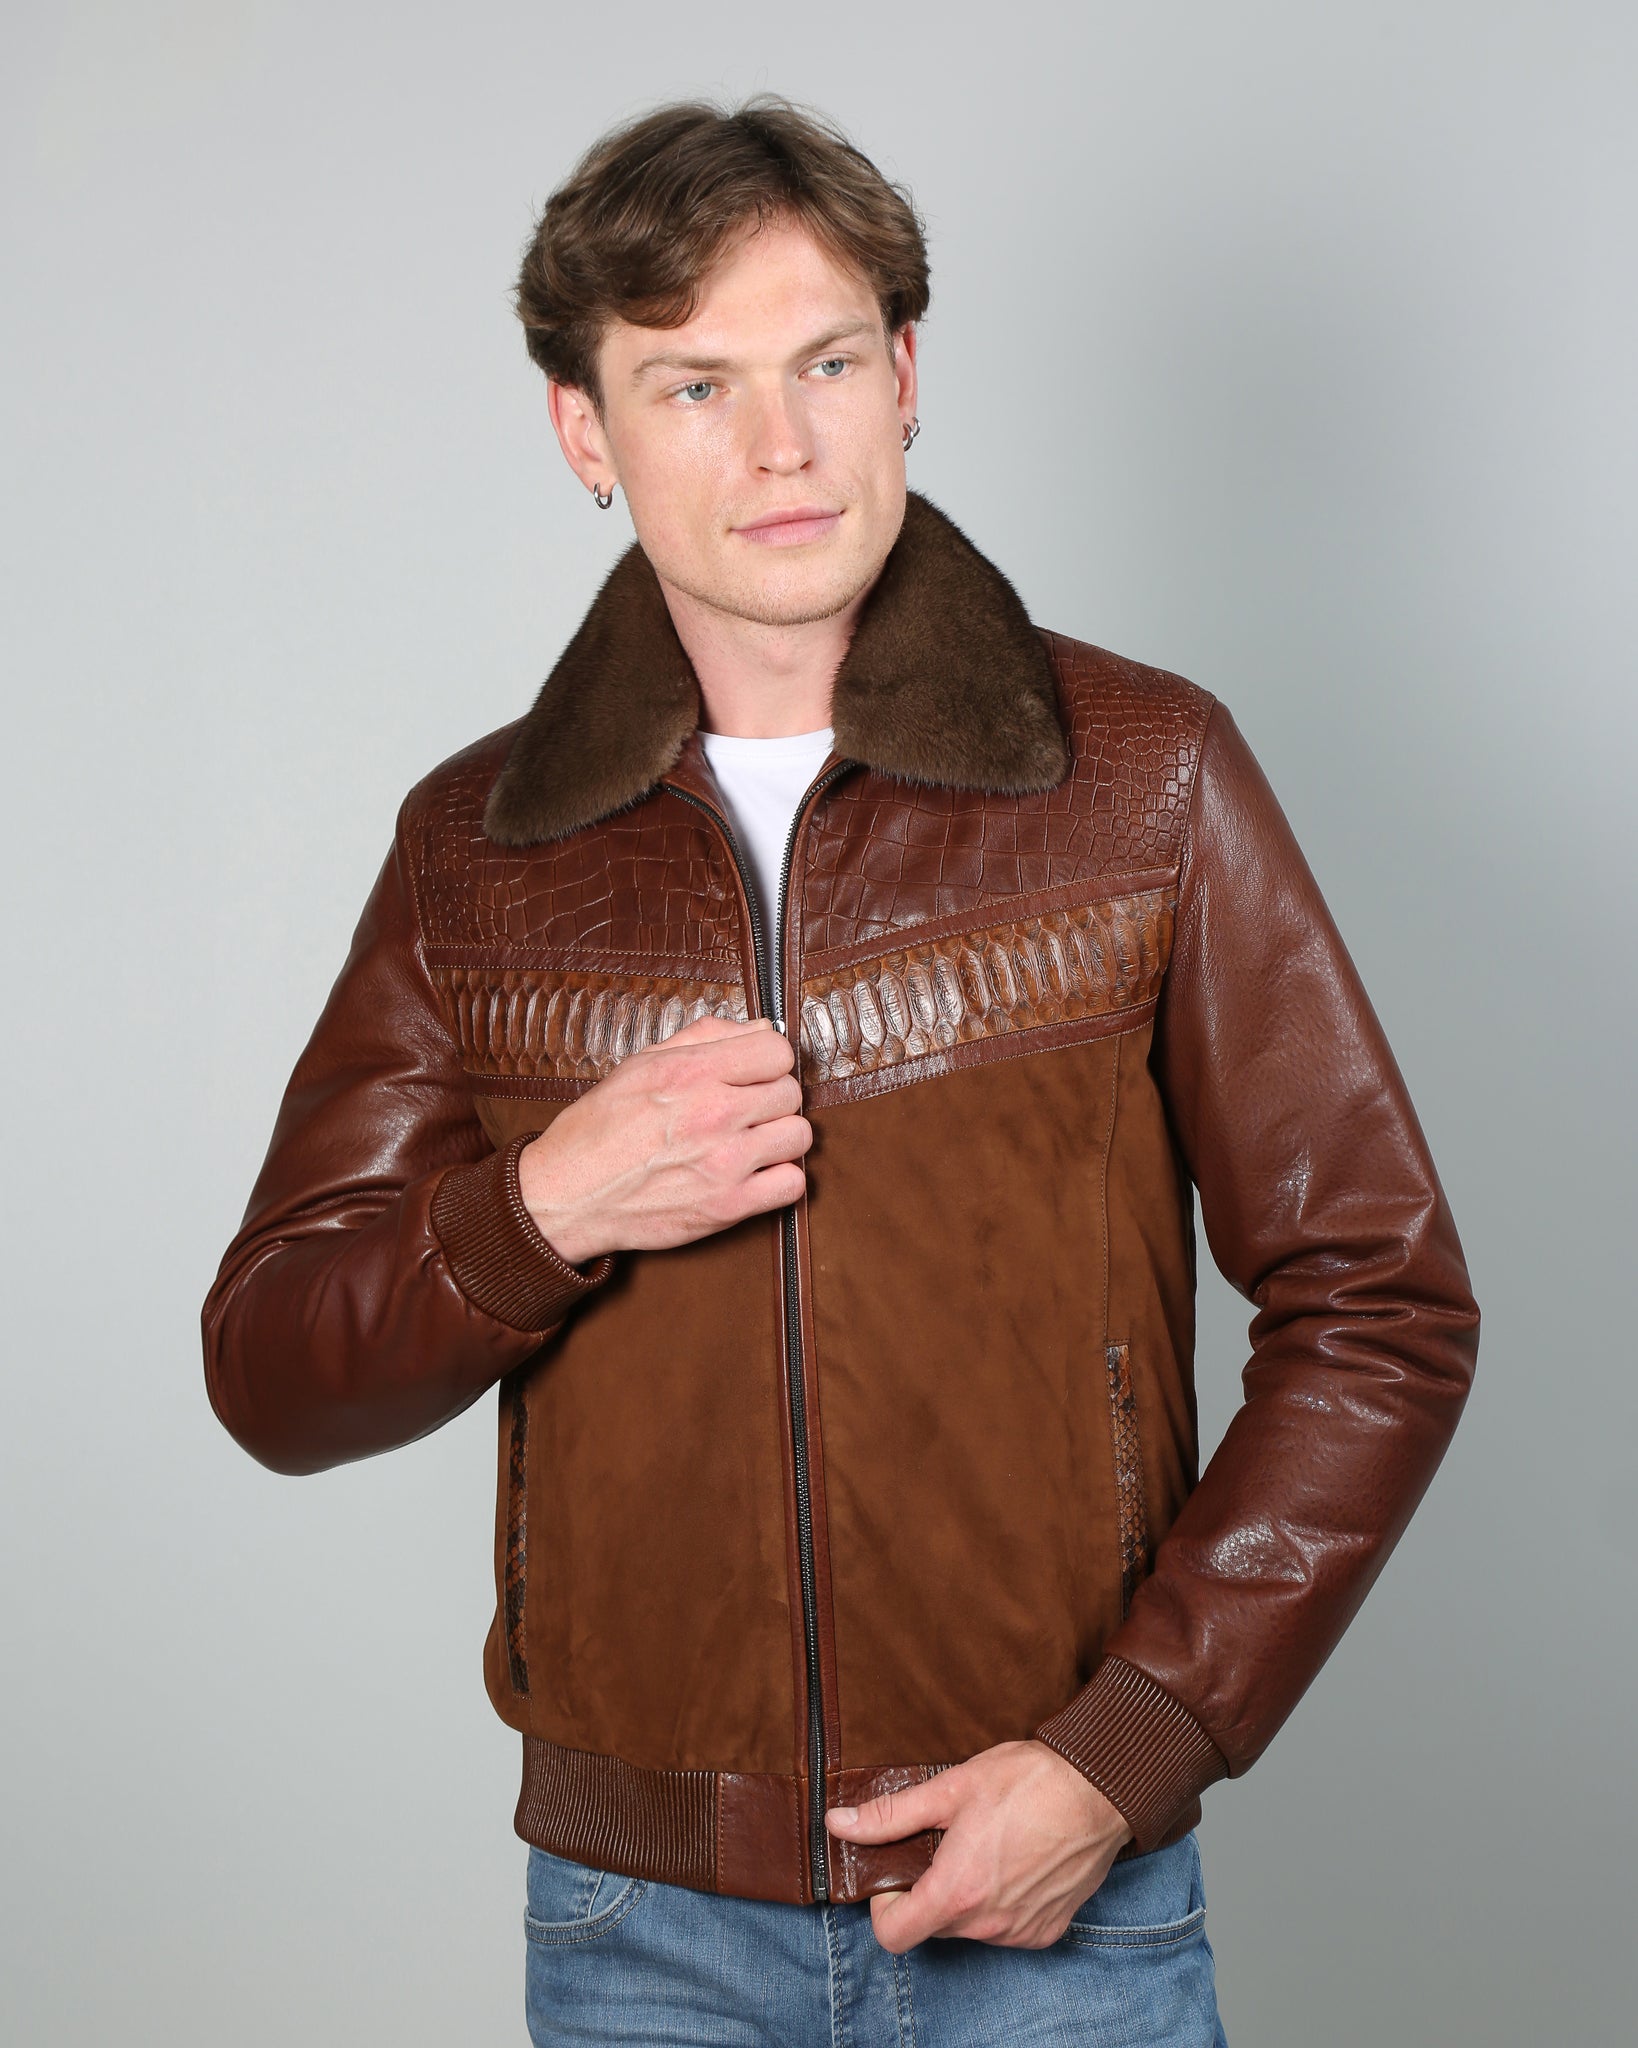 Tarvo Men Leather Jacket